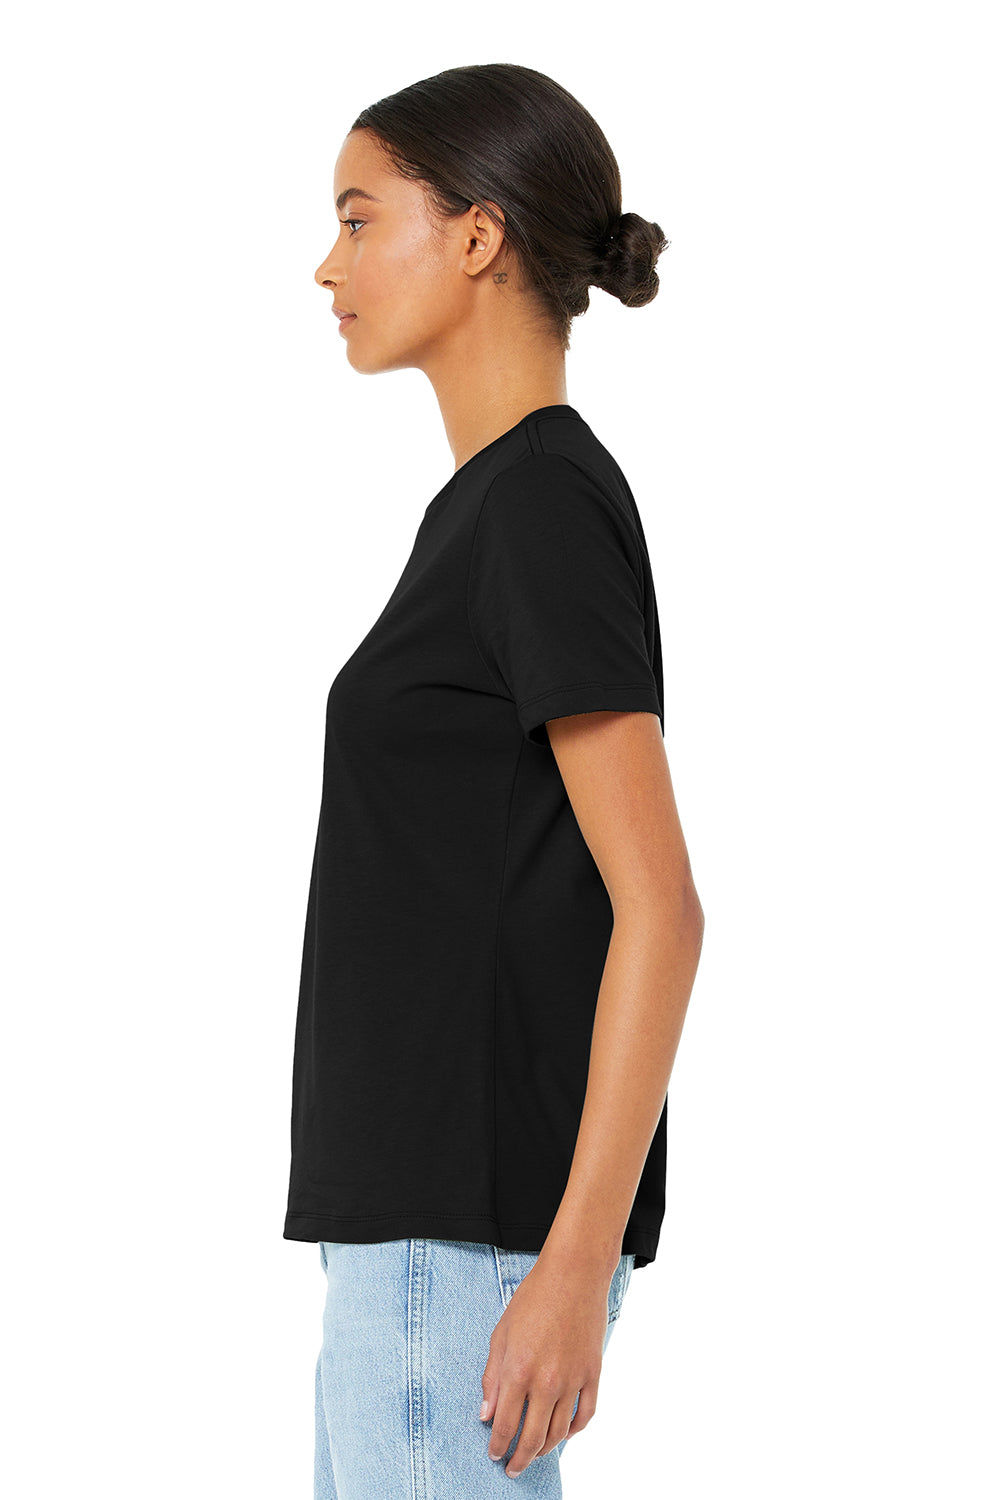 Bella + Canvas BC6400CVC/6400CVC Womens CVC Short Sleeve Crewneck T-Shirt Solid Black Model Side